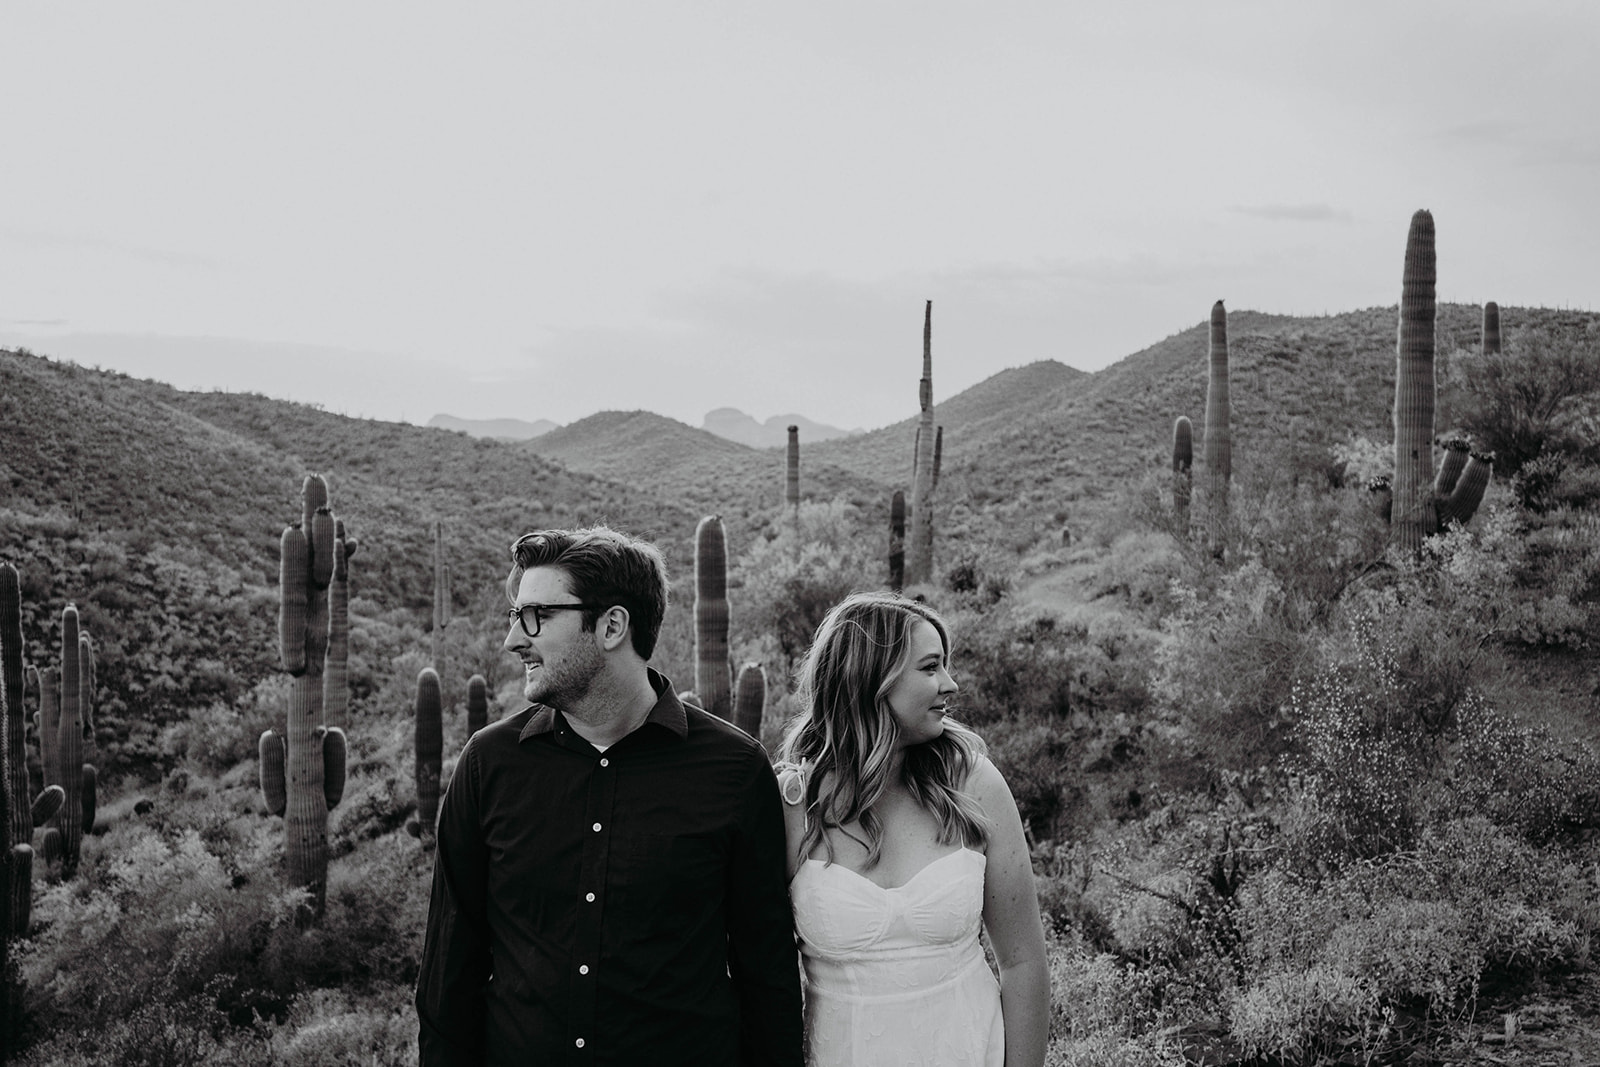 desert couple at river park for documentary engagement Arizona session, moody and romantic arizona sunset 